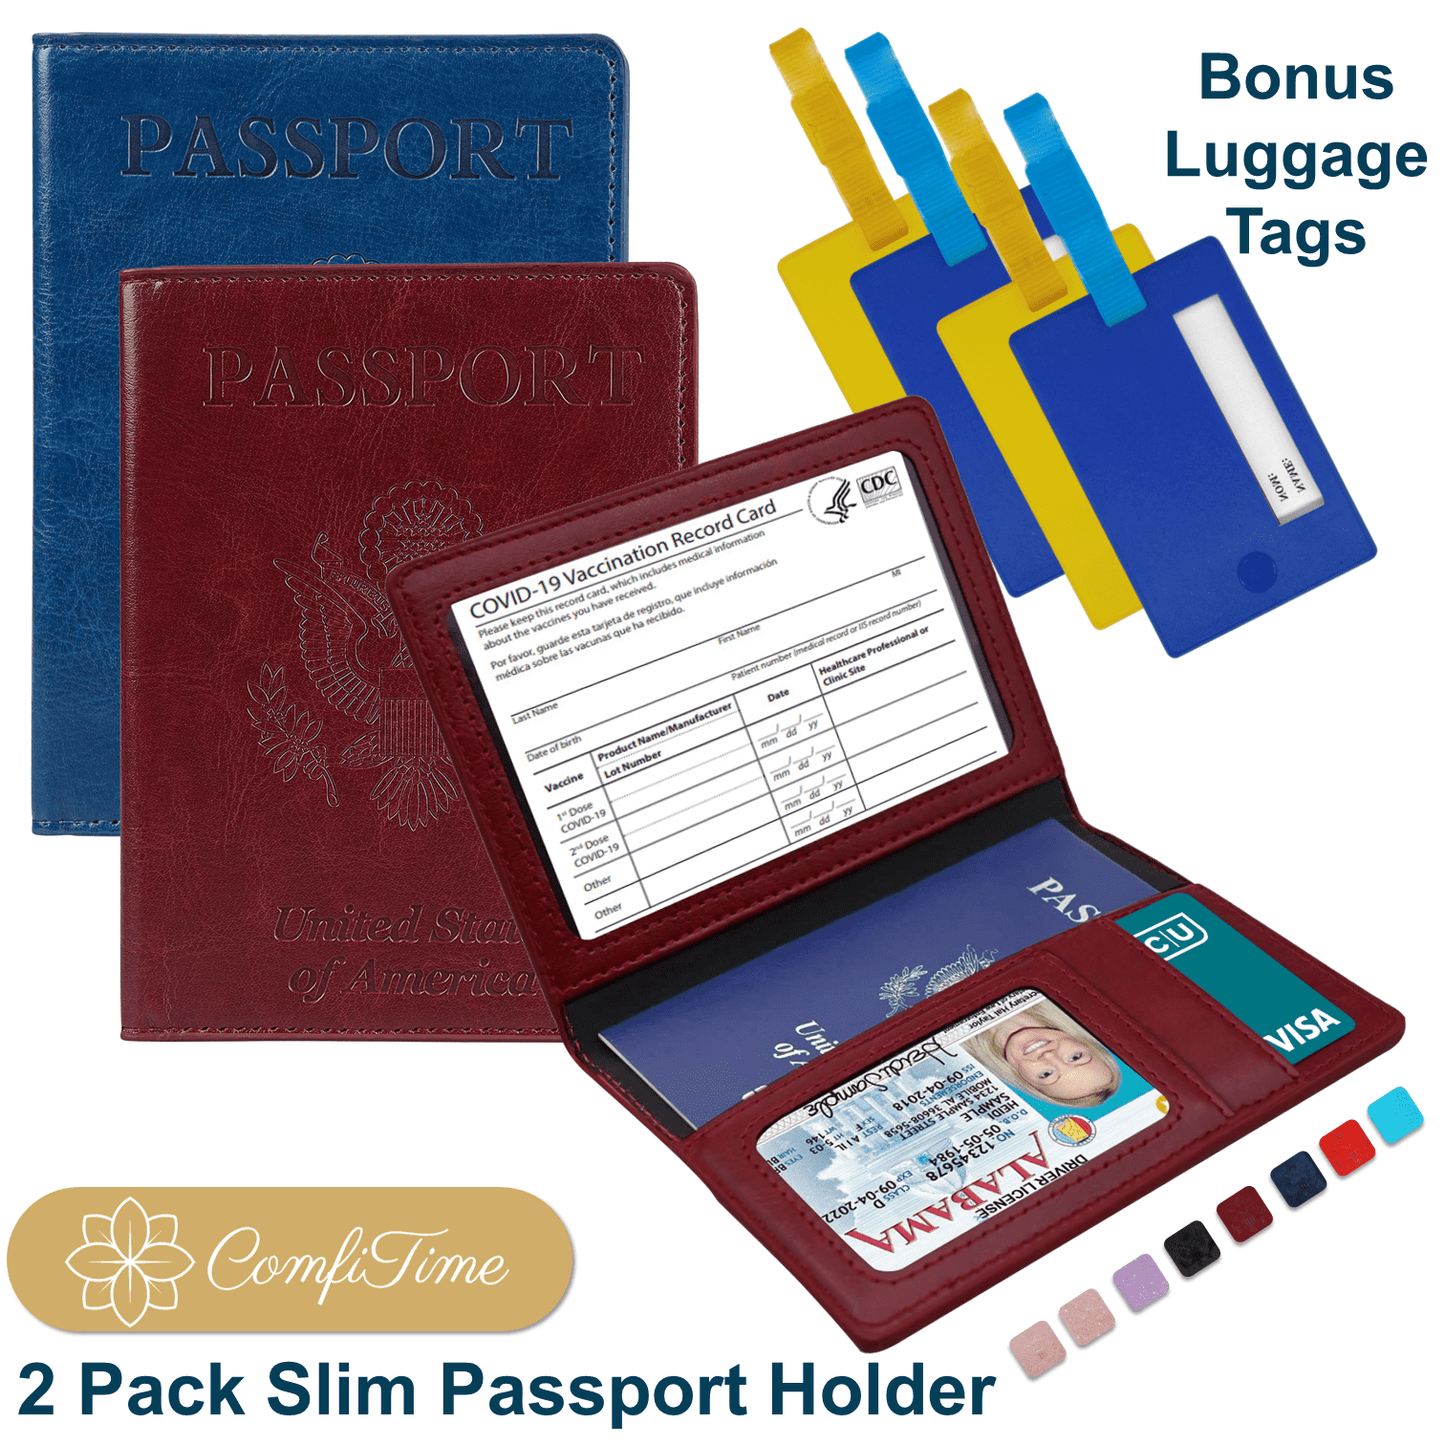 Slim Passport Holder With Bonus Luggage Tags, 2 Pack